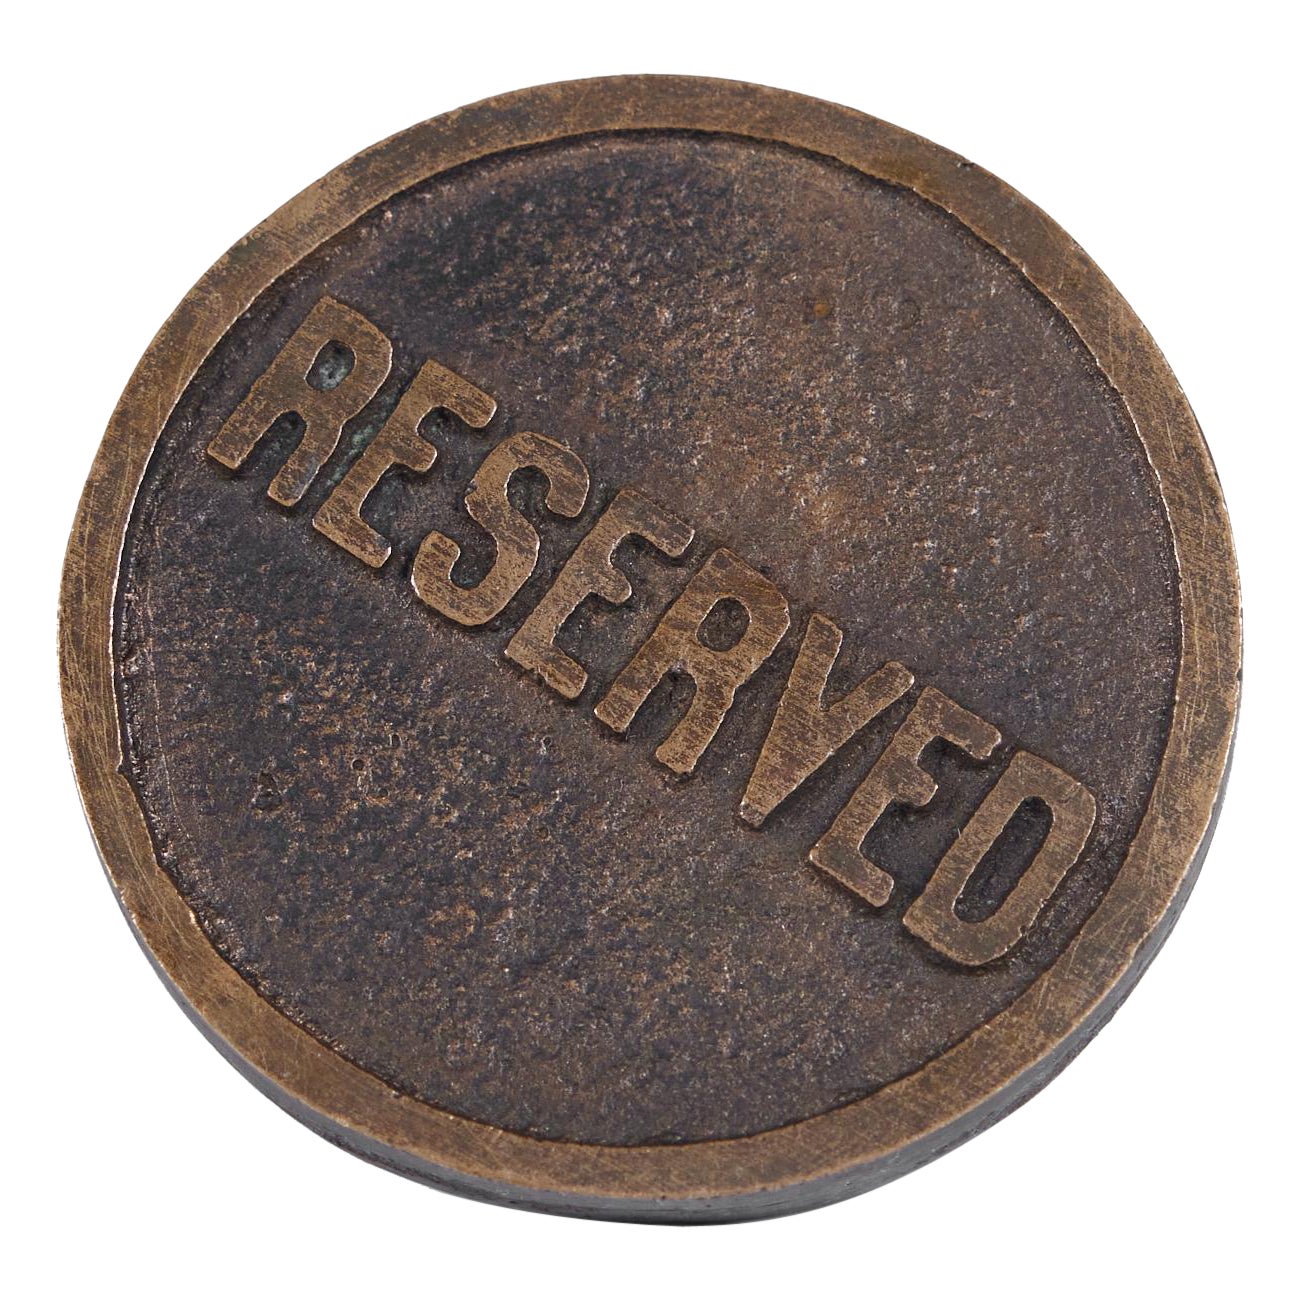 Brass "Reserved" Button